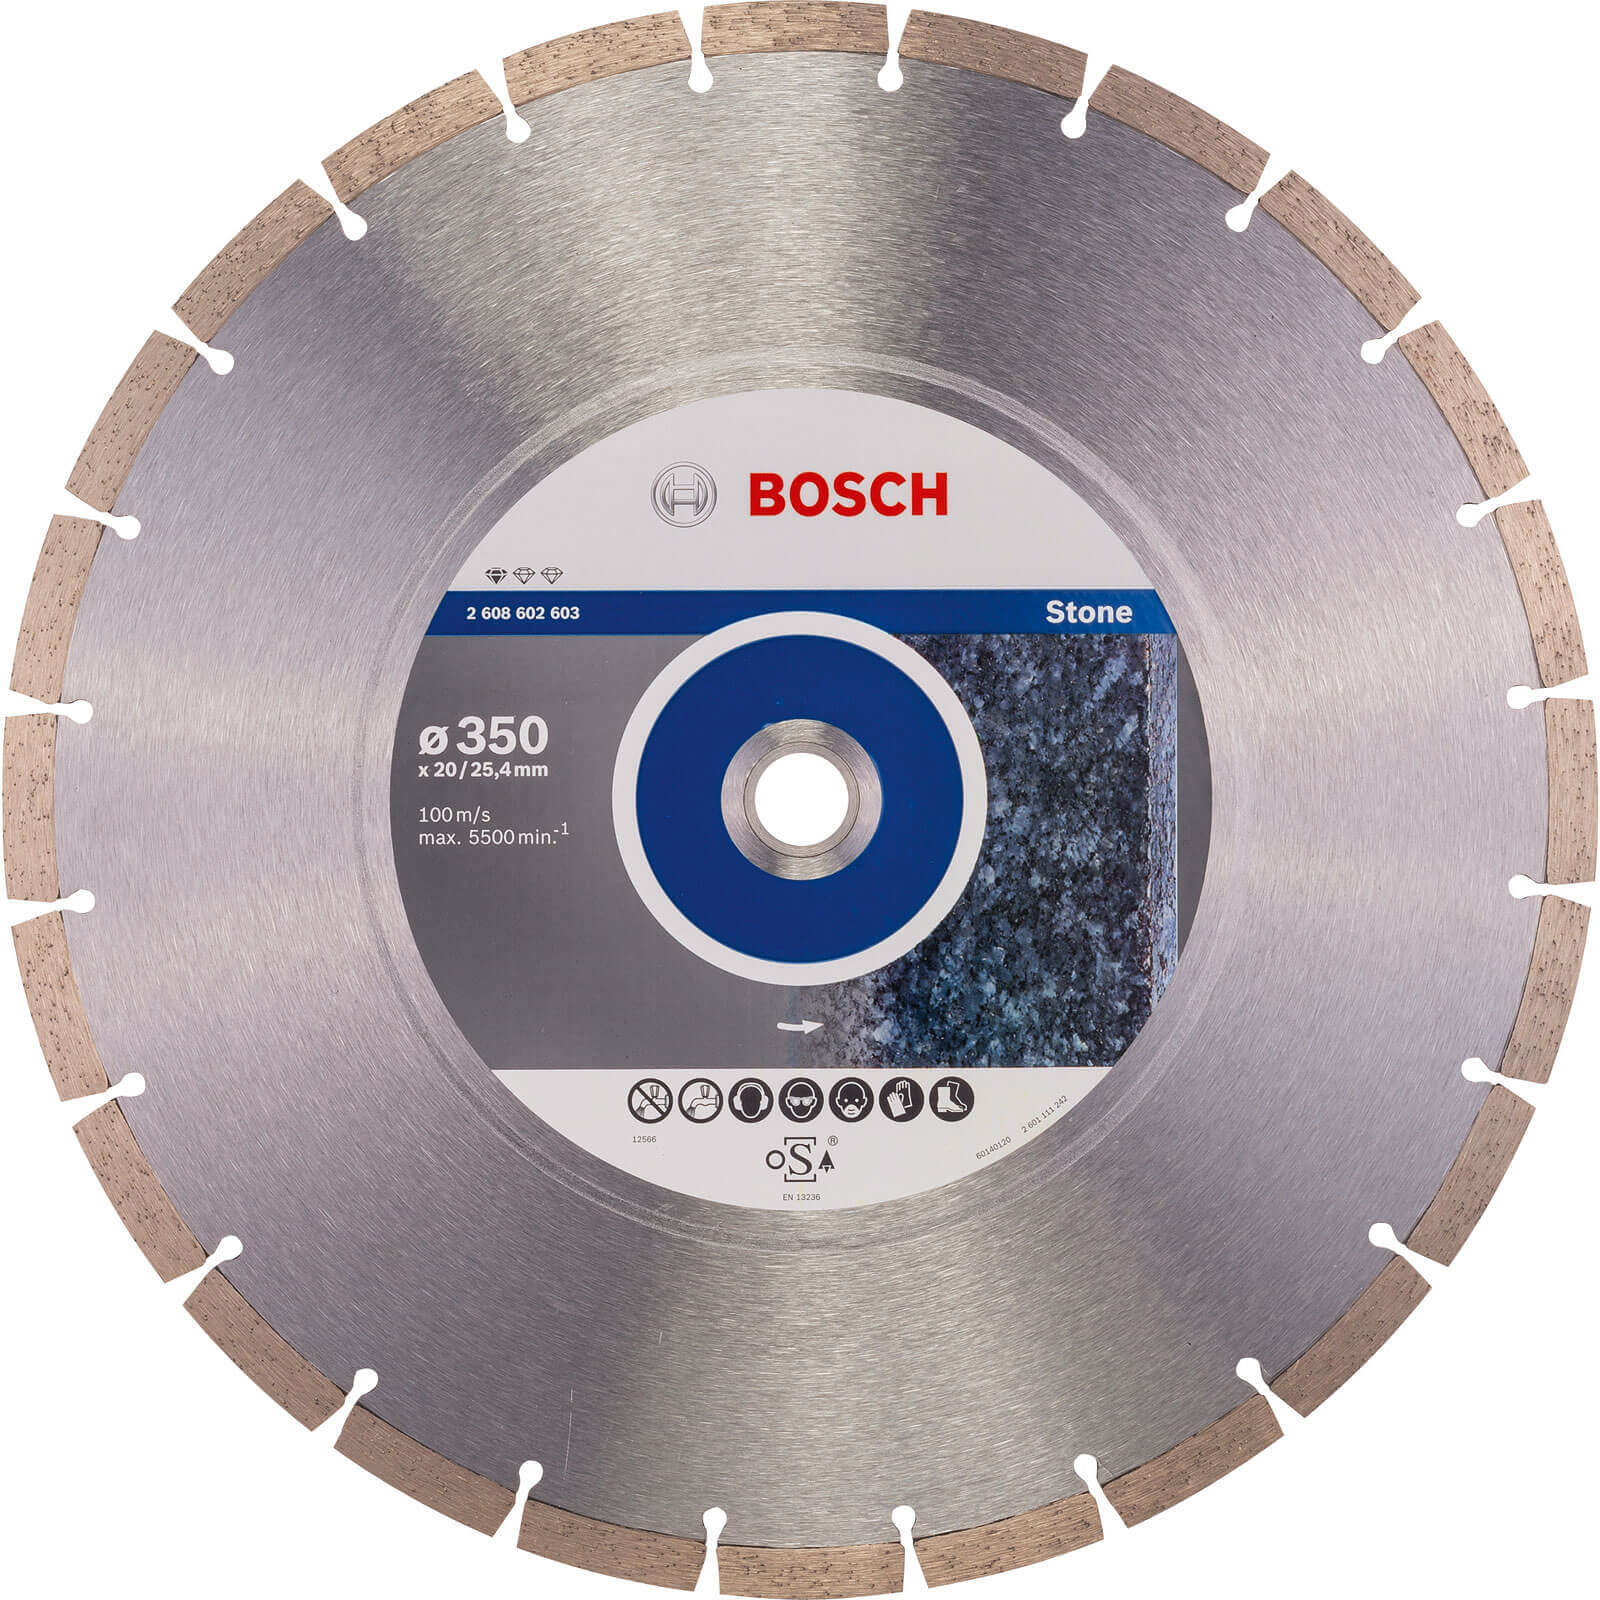 Photos - Cutting Disc Bosch Standard Diamond Disc for Stone 350mm 2608602603 